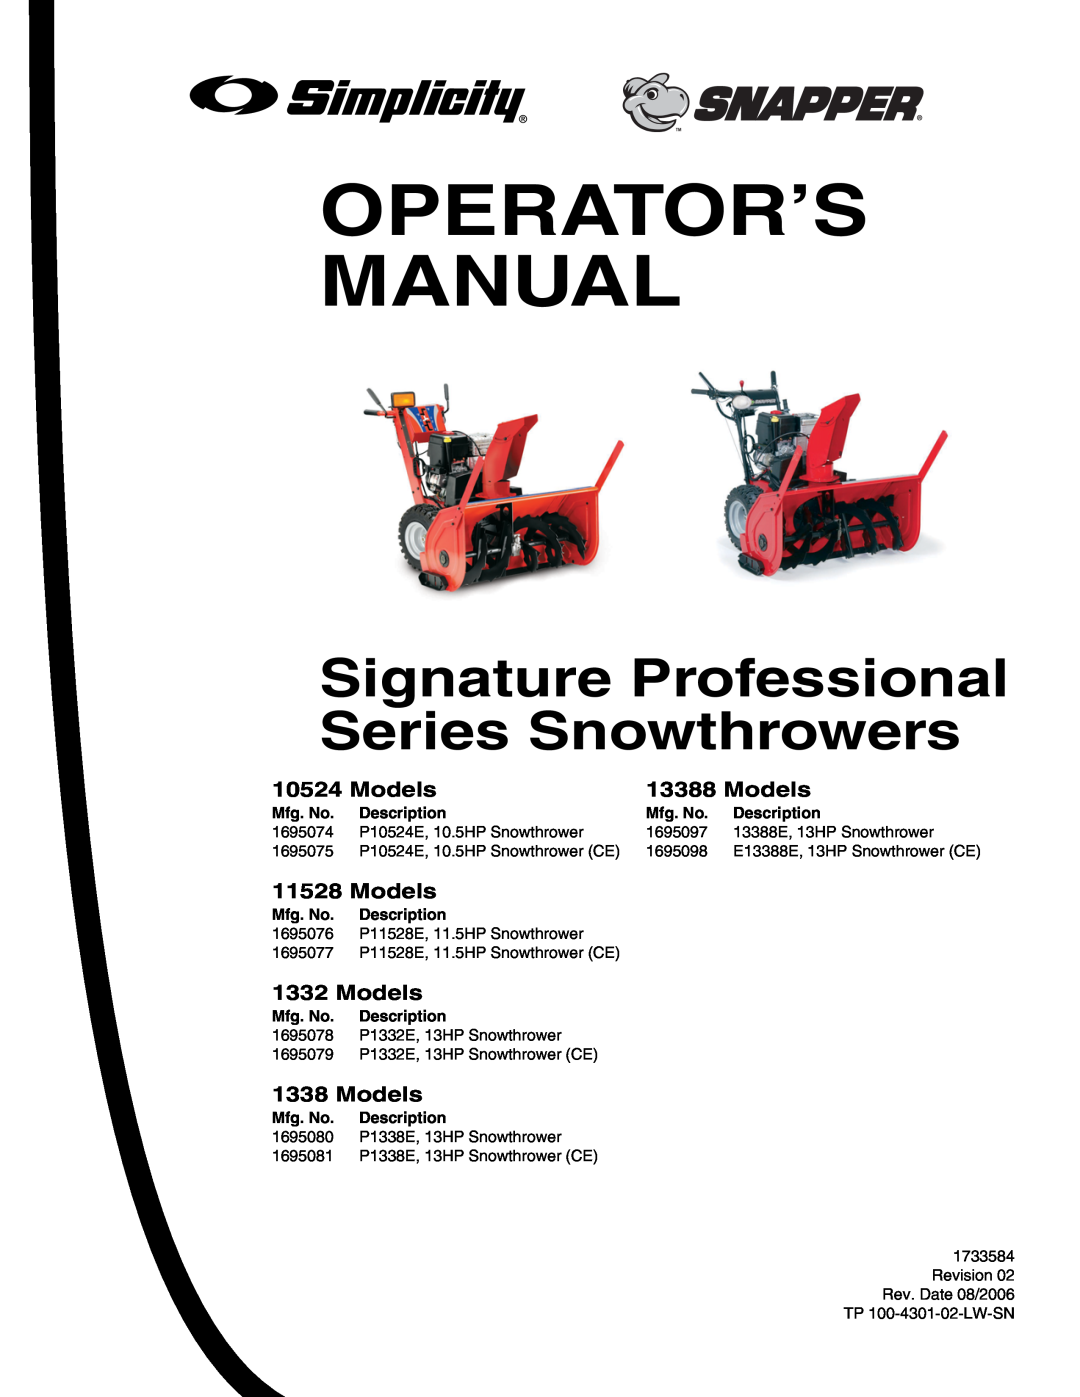 Snapper 10524, 11528, 1332, 1338, 13388 manual Operator’S Manual, Signature Professional Series Snowthrowers, Mfg. No 